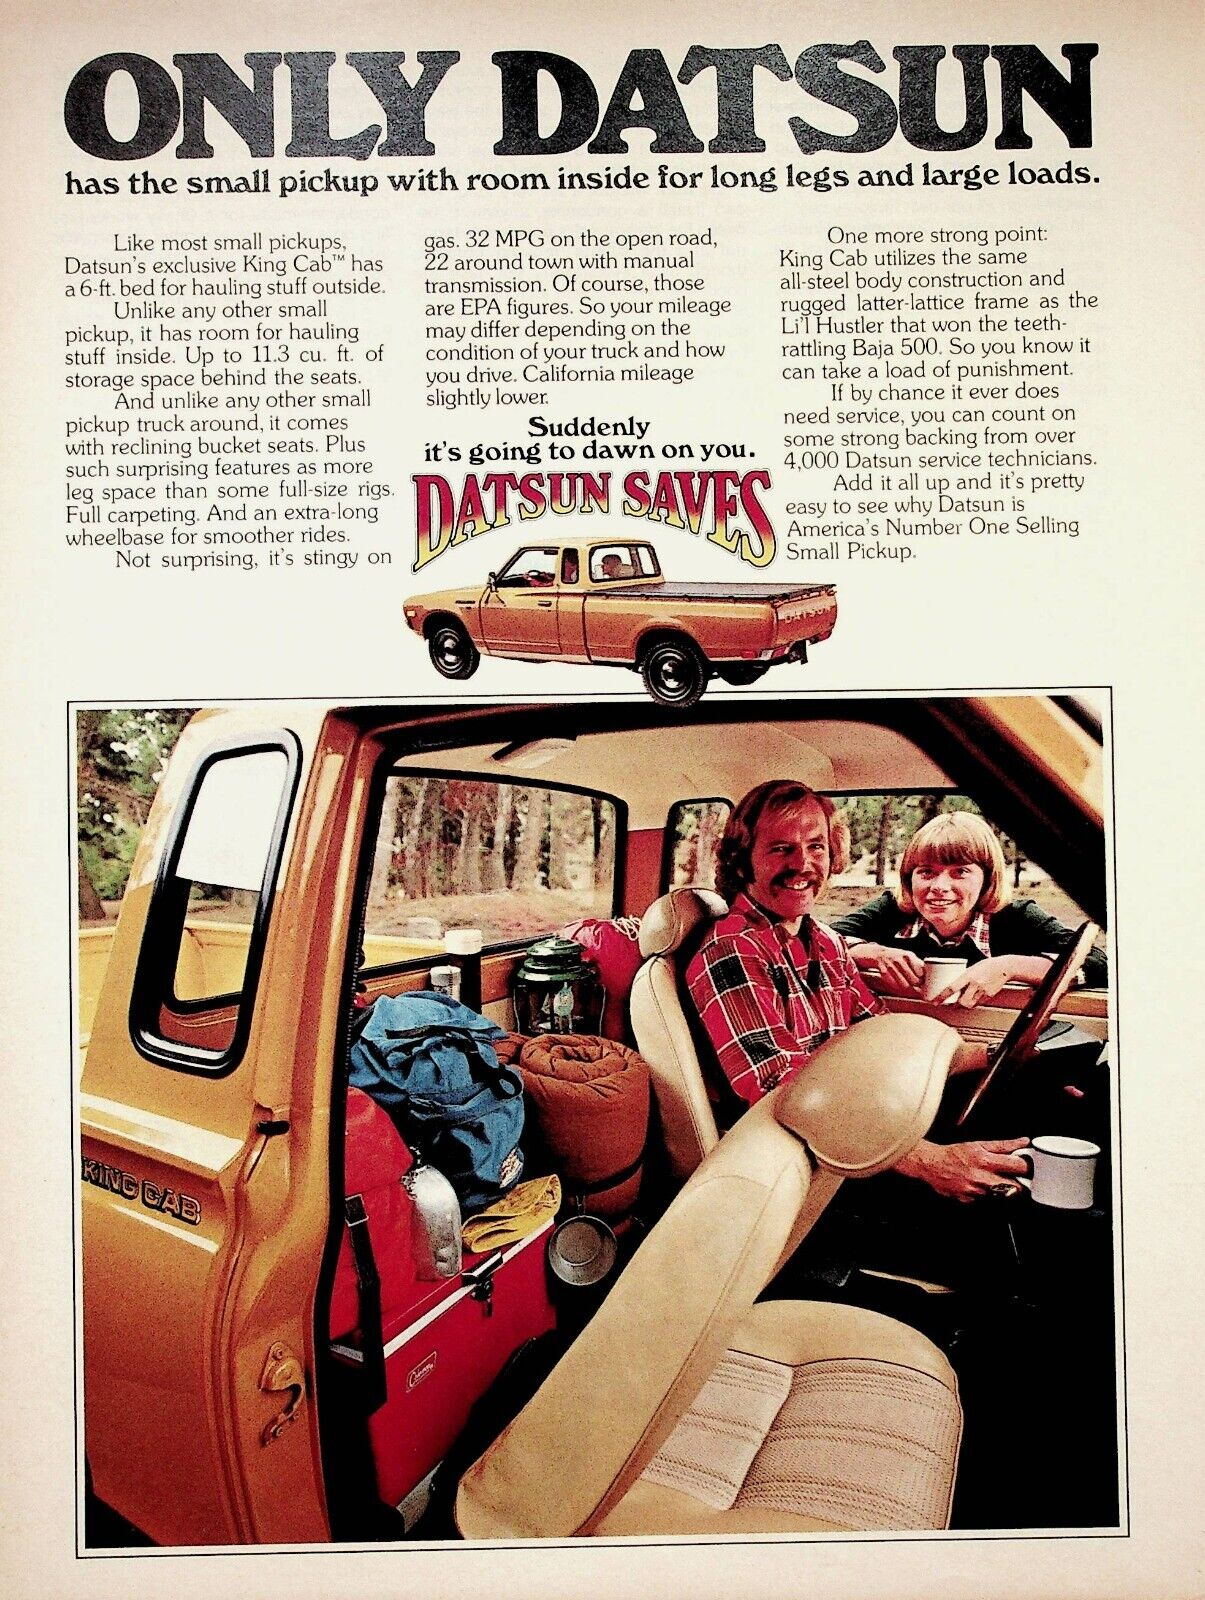 1977 Datsun King Cab Pickup Truck - Vintage Motorcycle Ad